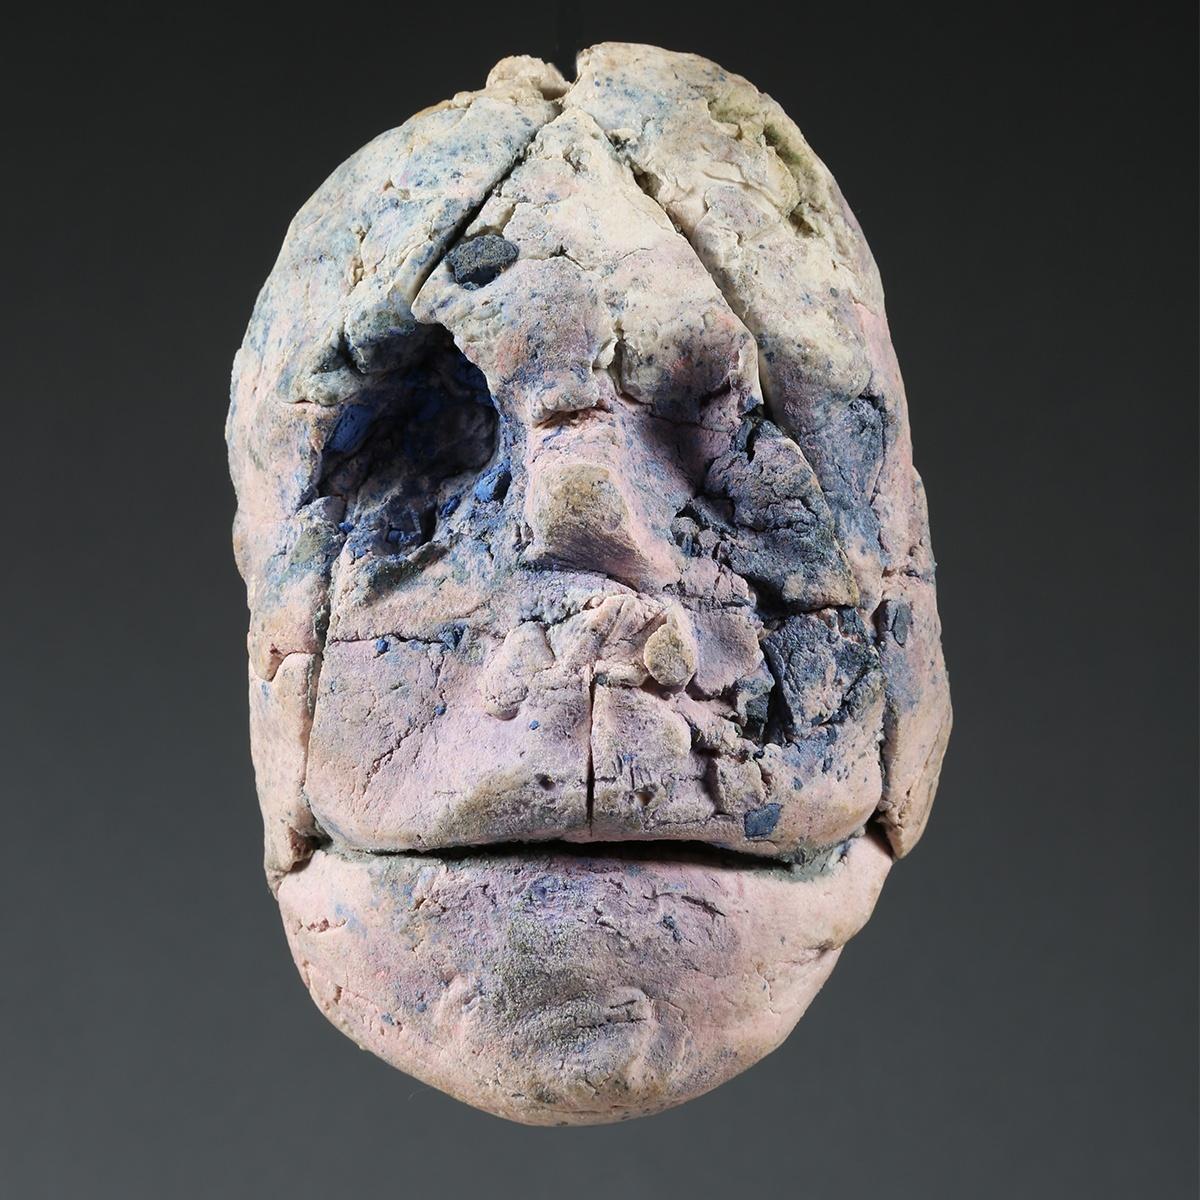 Stephen De Staebler (American, 1933–2011), Lavender Face with Missing Eye, 1976. Pigmented stoneware, 7 x 4 x 2 1/2 in. Estate of Stephen De Staebler. 